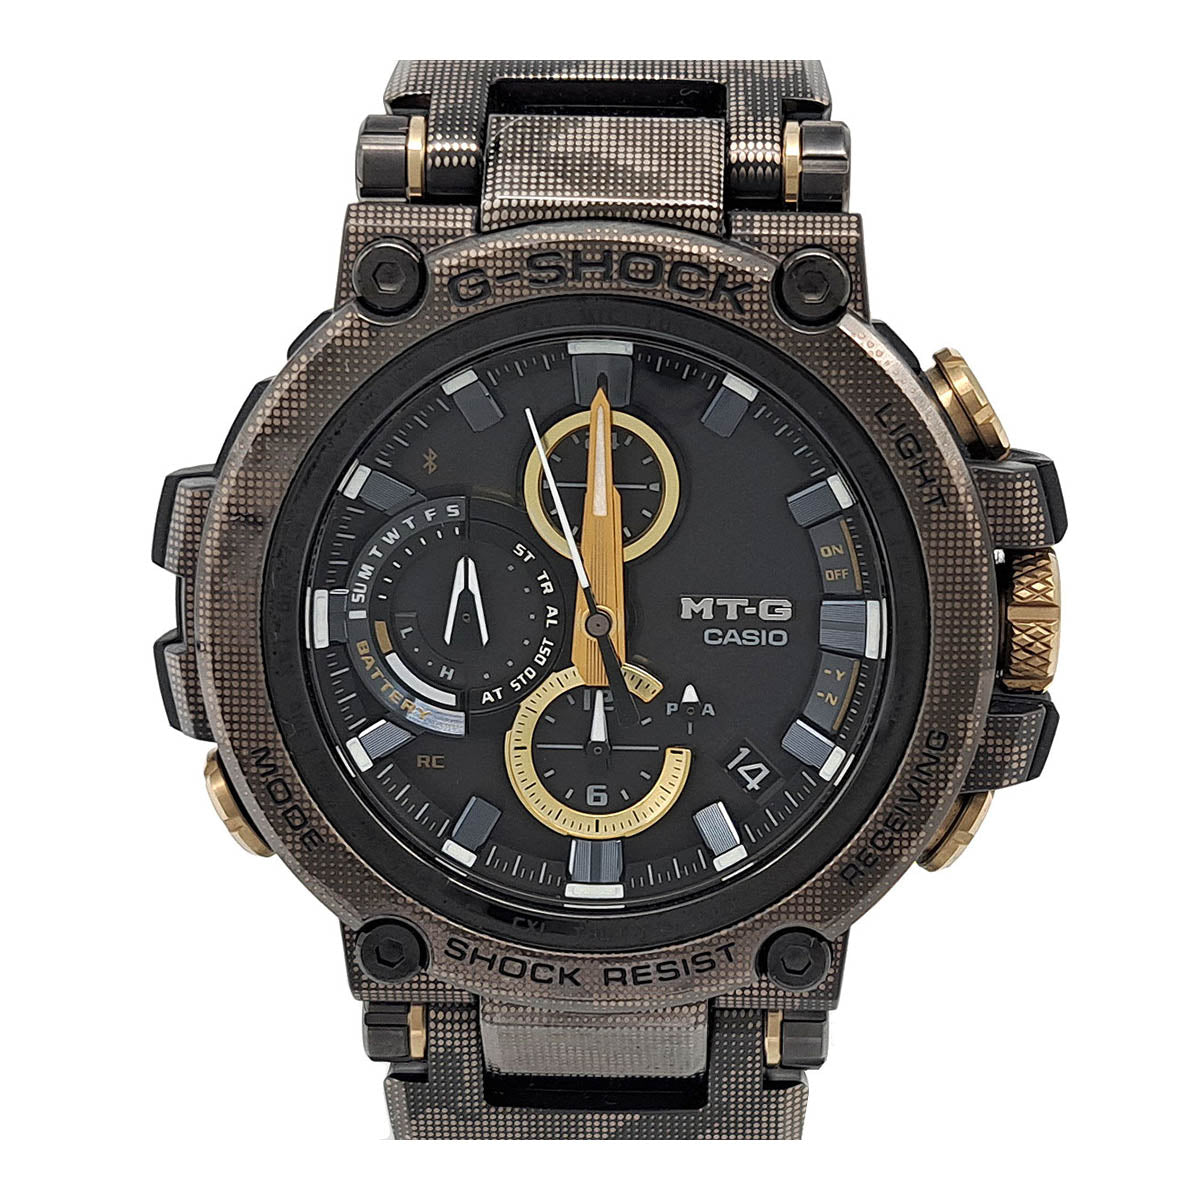 Casio G-Shock MT-G Camouflage Limited Edition Solar Stainless Steel Men's Watch MTG-B1000DCM-1AJR